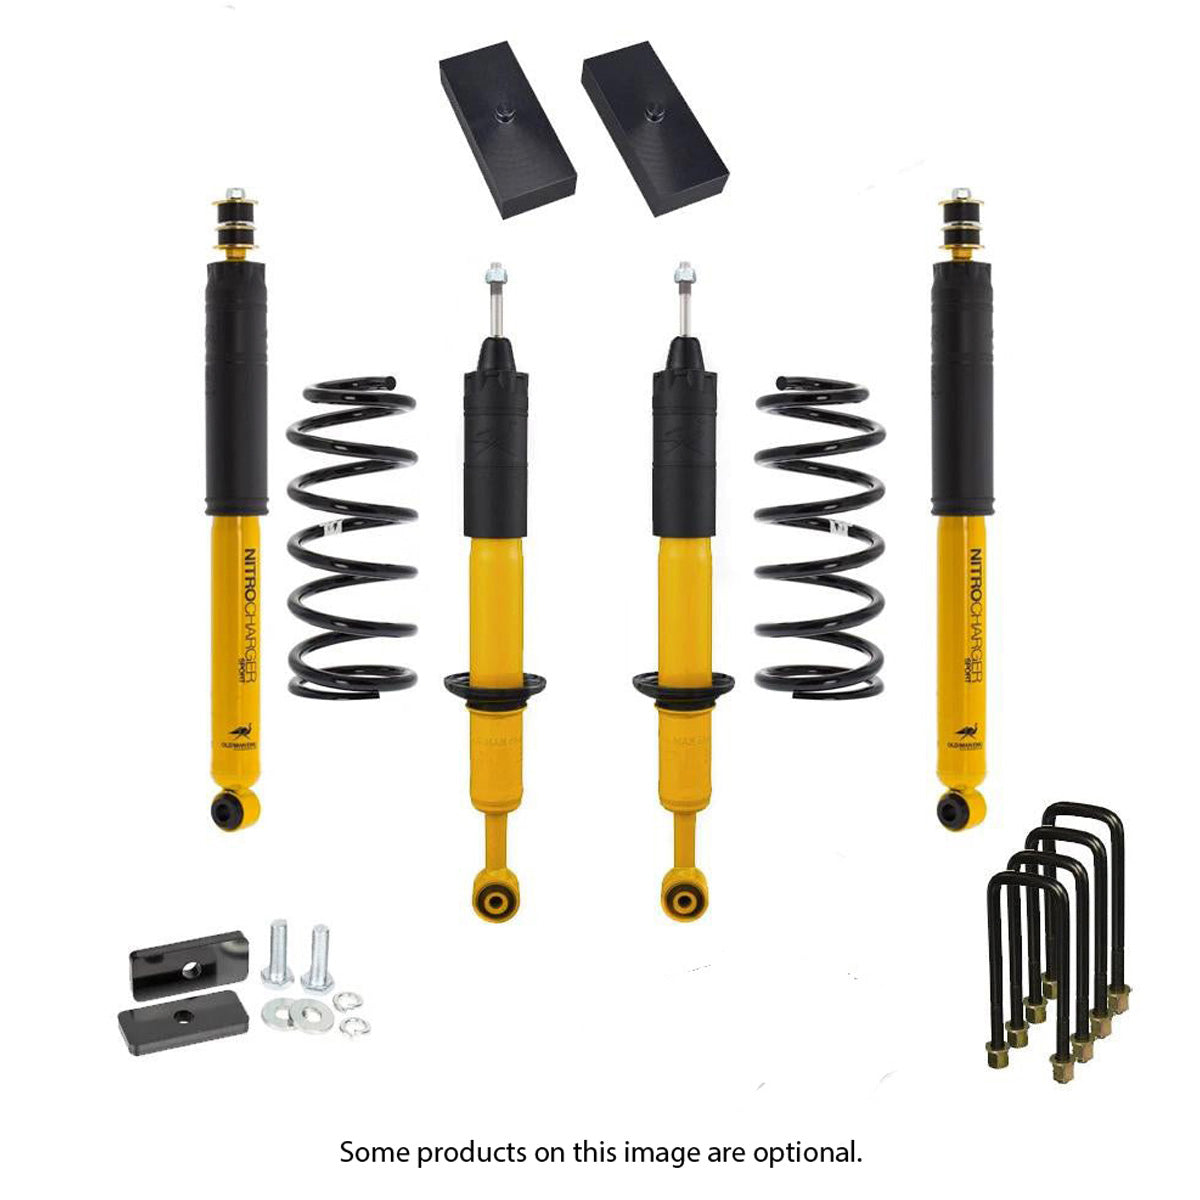 OME 2.5 - 3 inch Essentials Lift Kit Hilux Vigo (05-15)